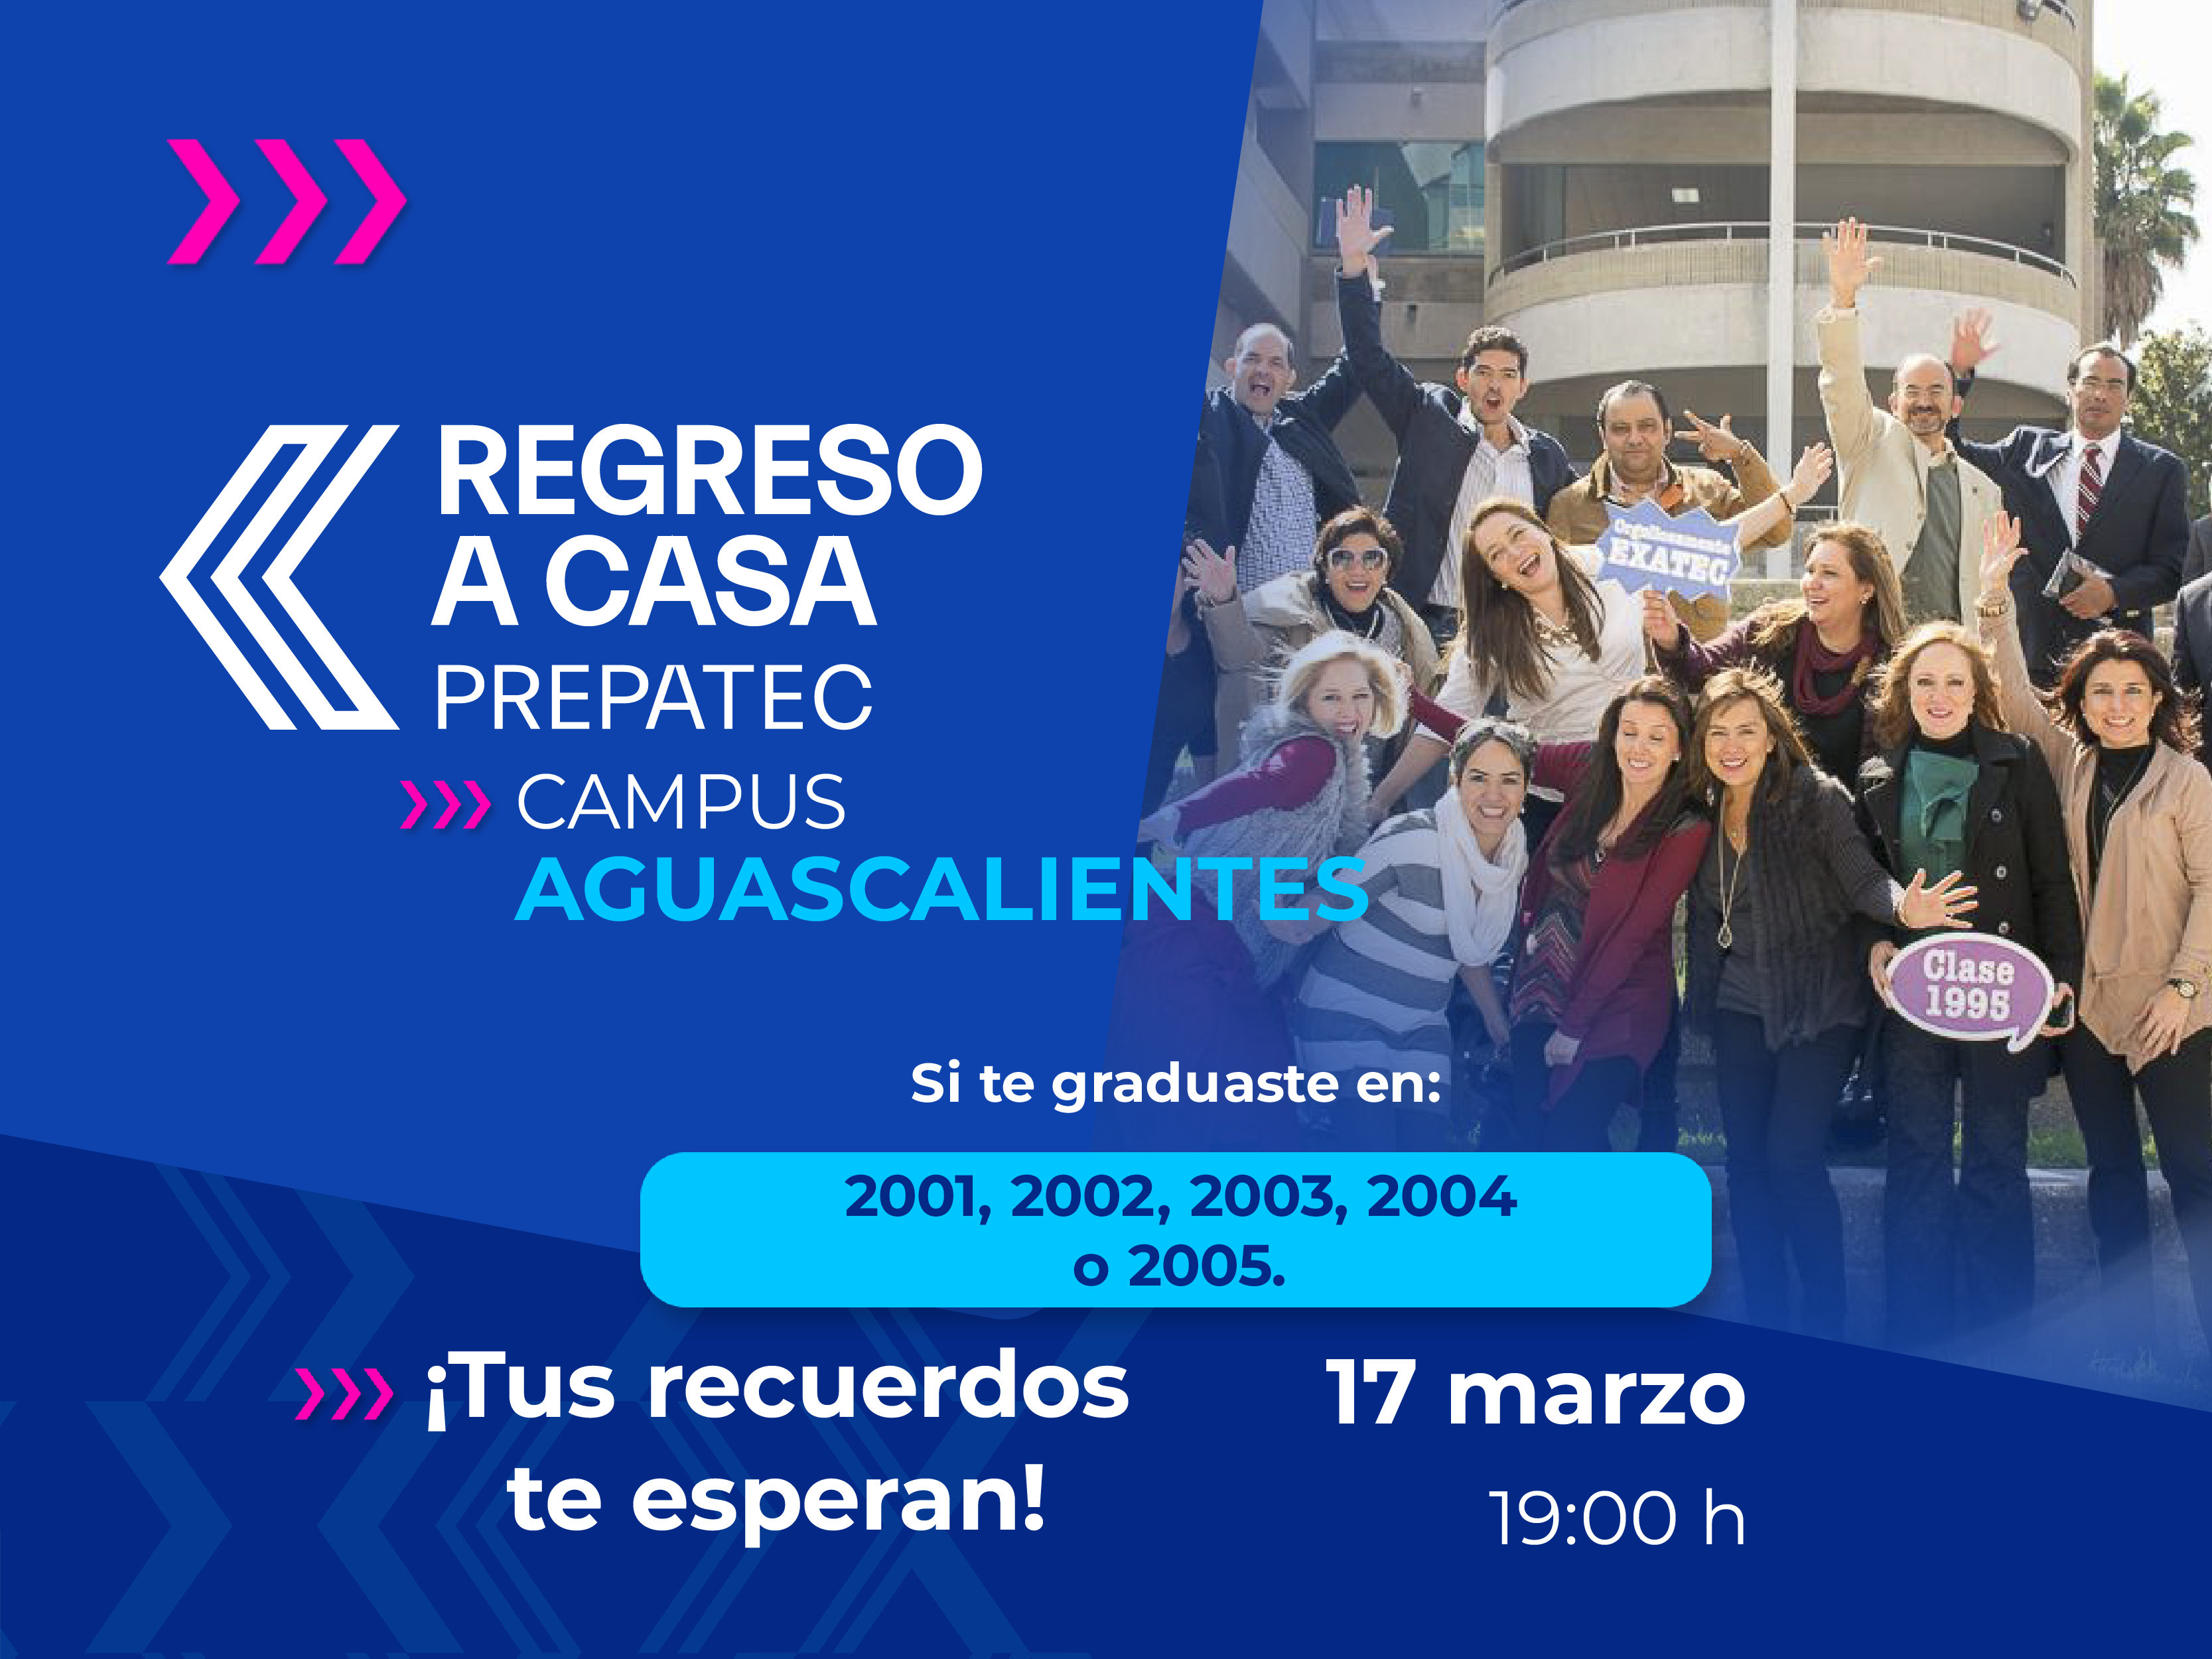 Regreso a Casa 2022 | PrepaTec Campus Aguascalientes